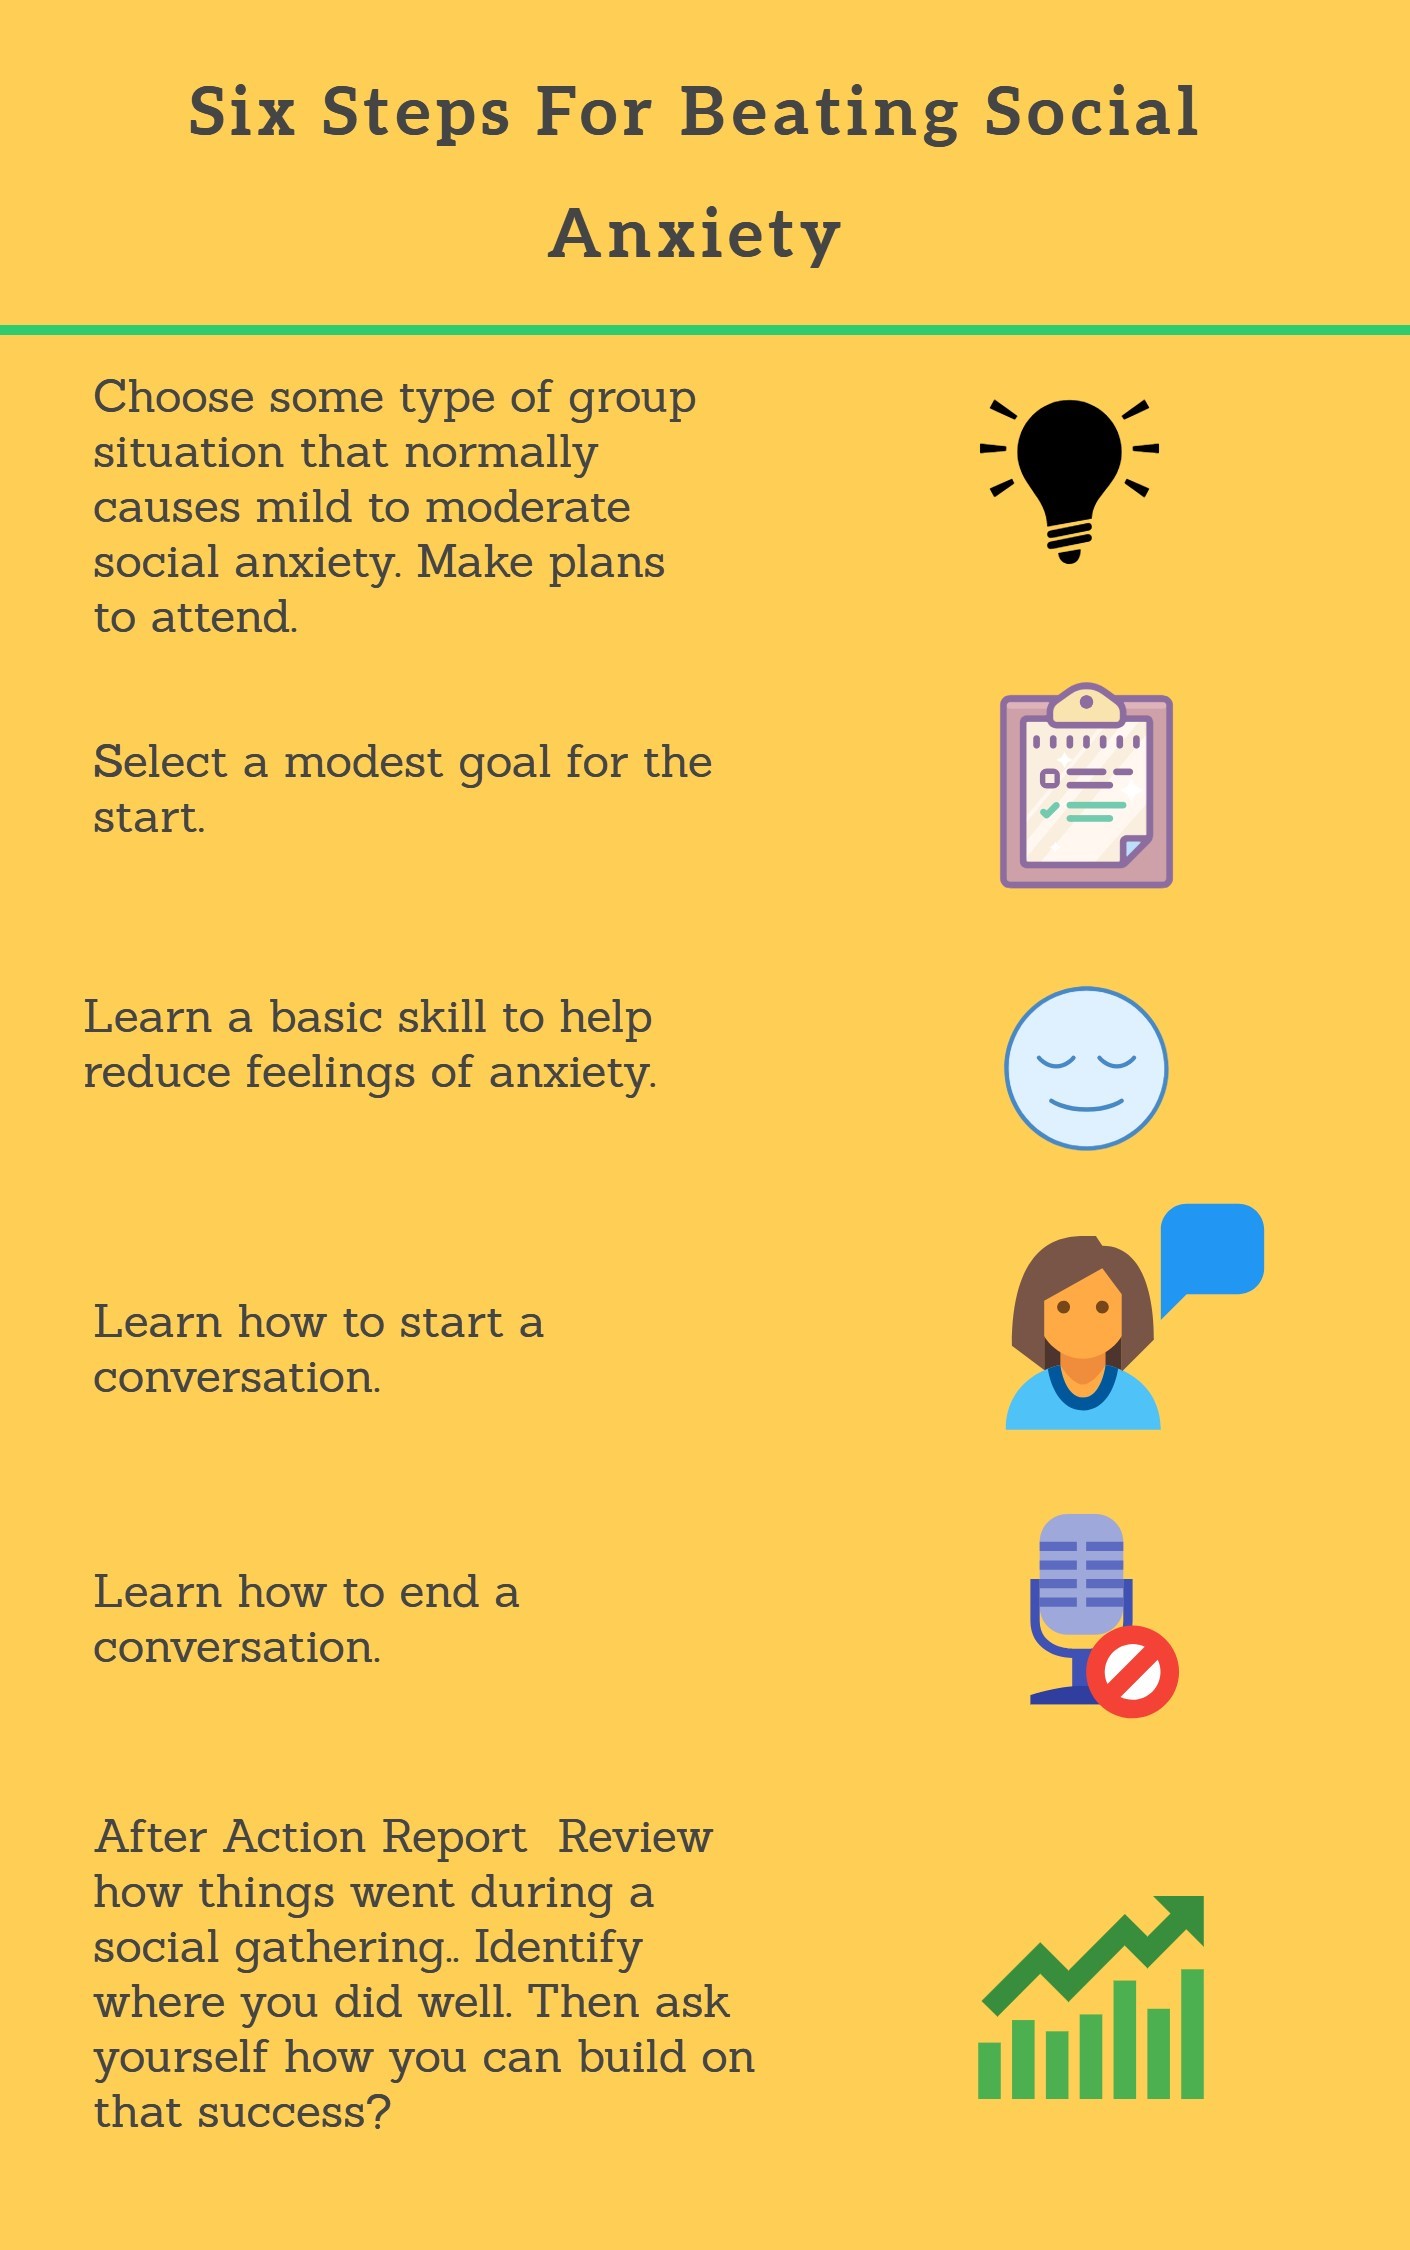 social anxiety presentation tips